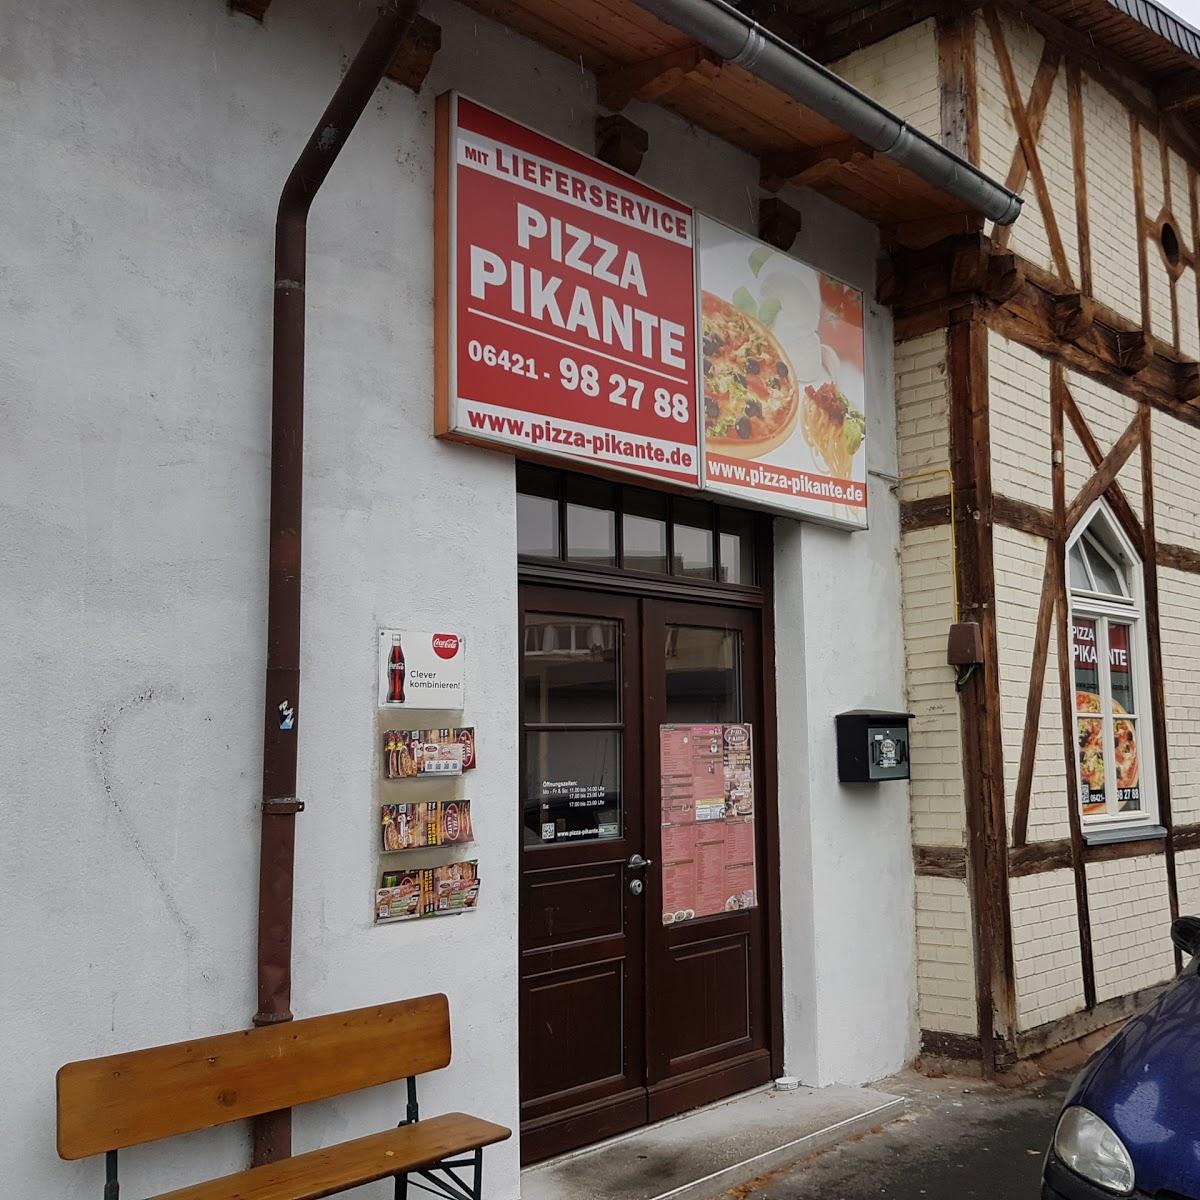 Restaurant "Pizza Pikante" in Marburg